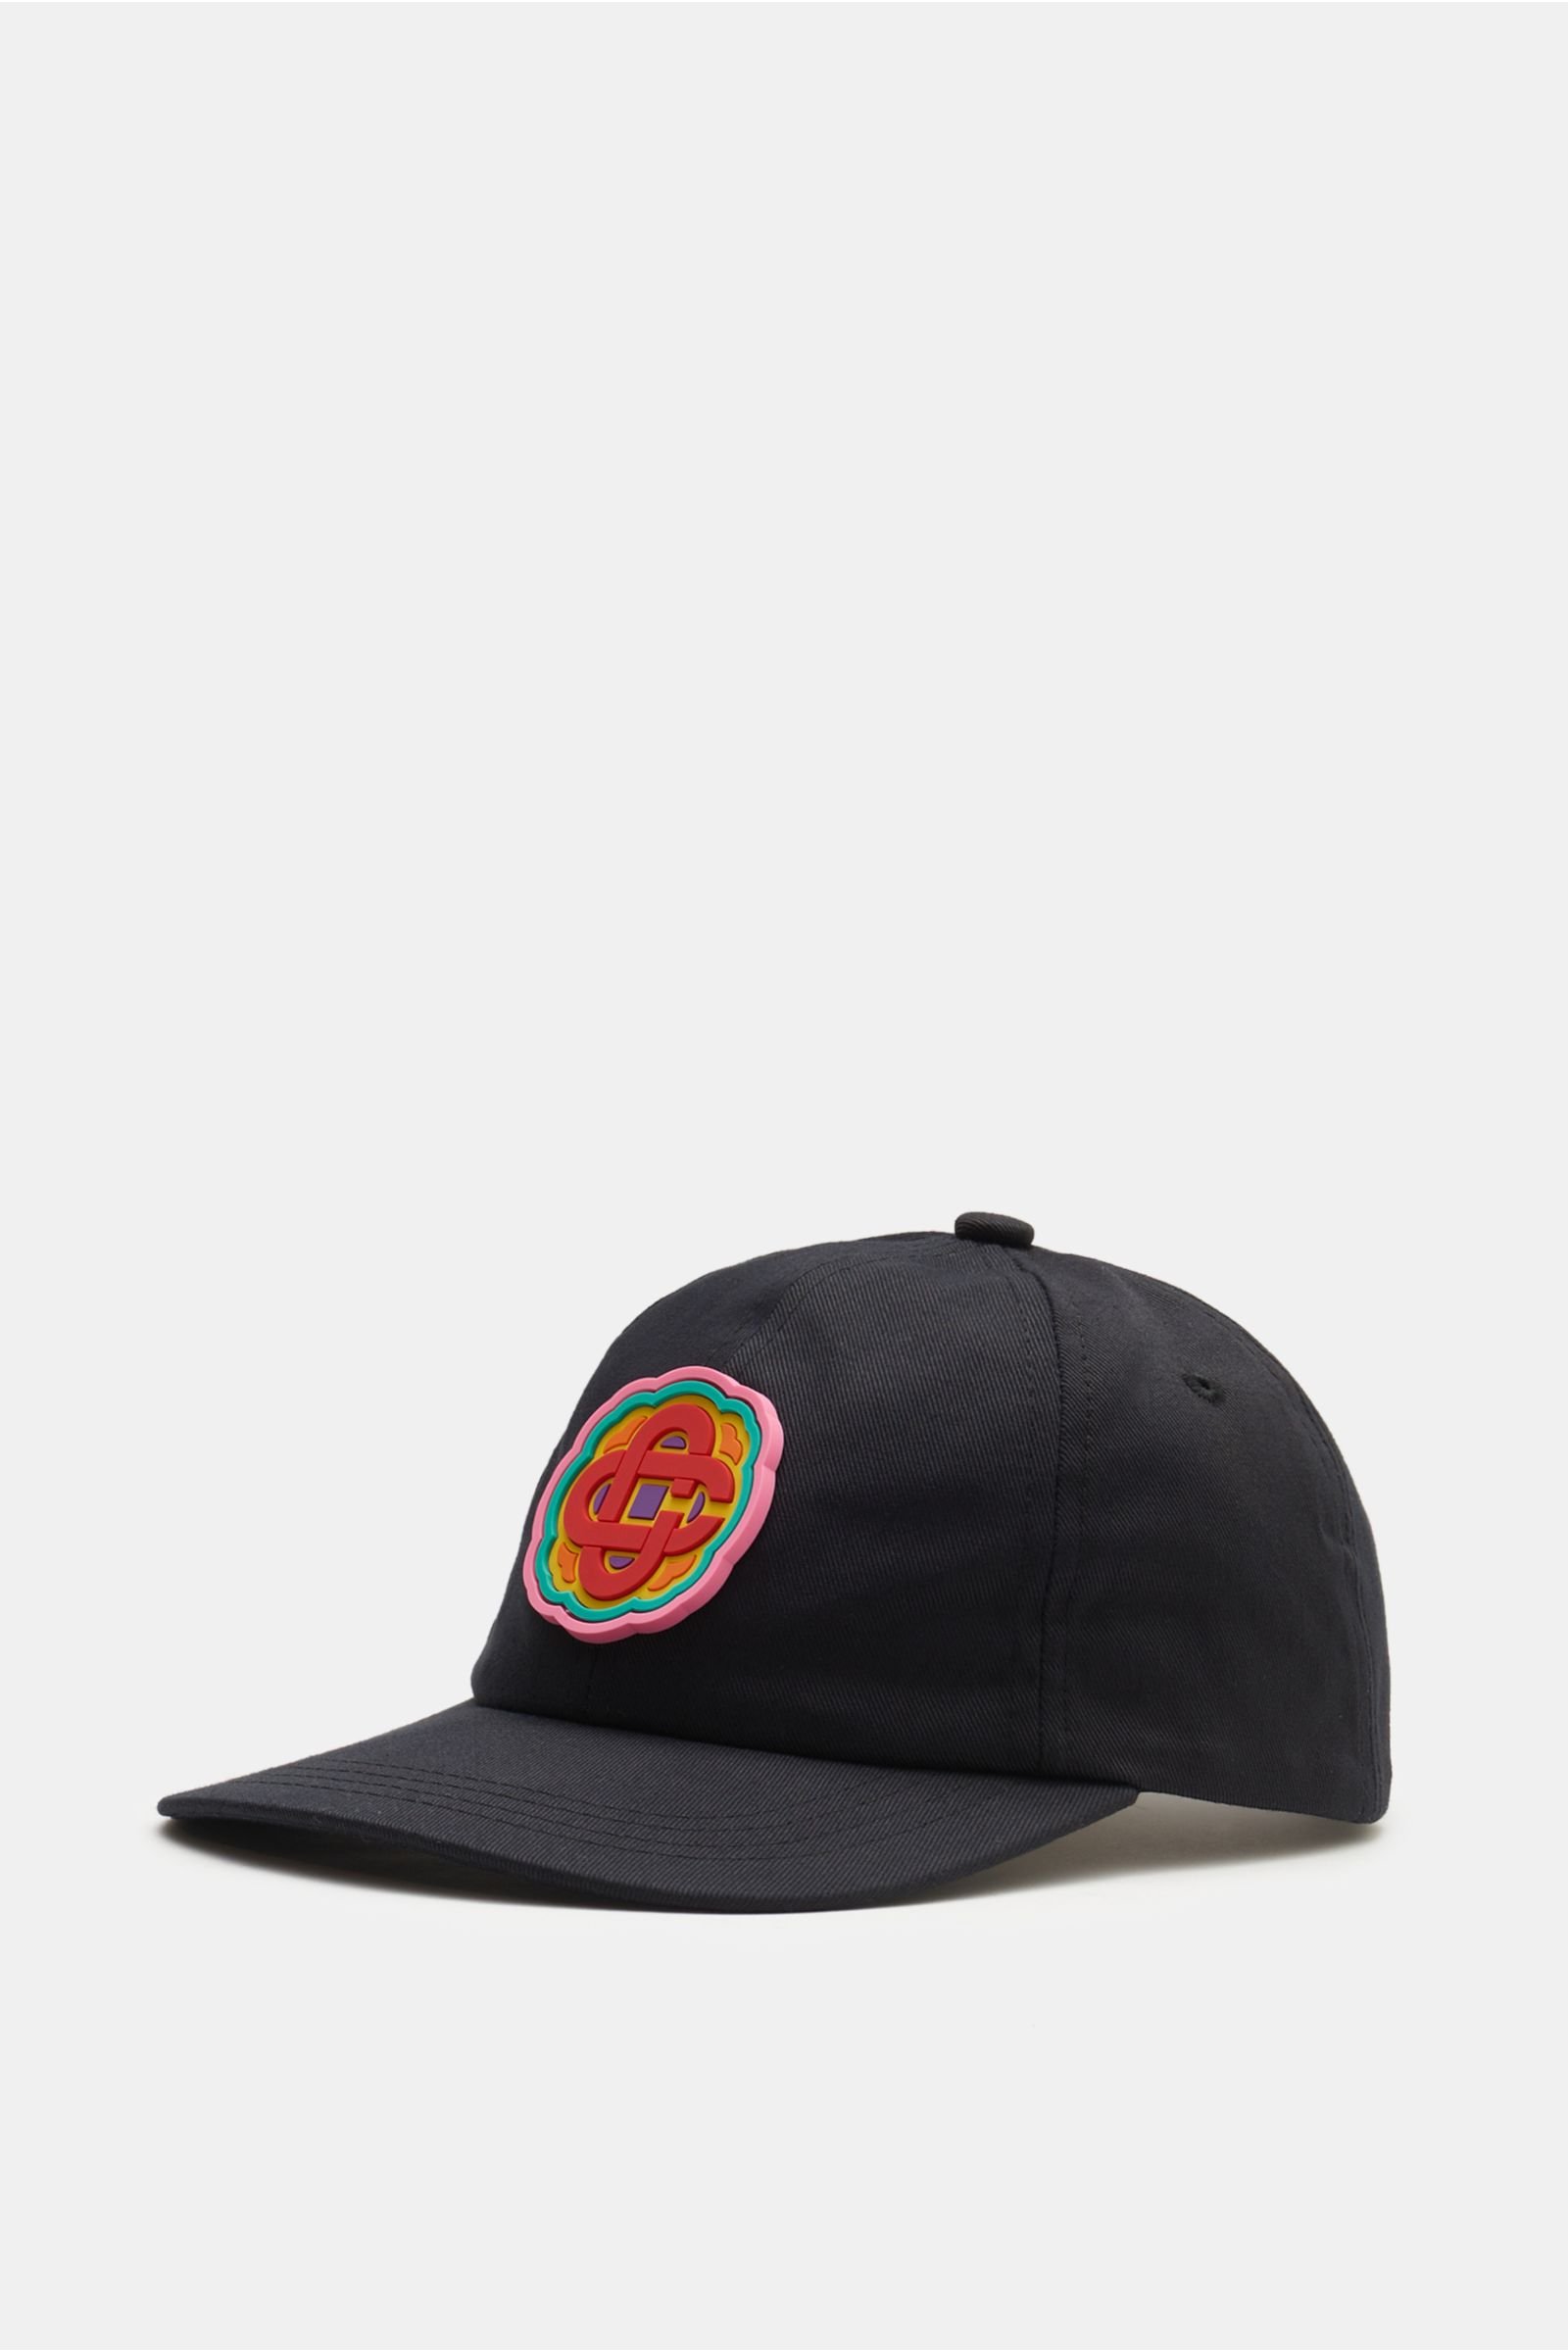 Baseball-Cap 'Rainbow Monogram' schwarz